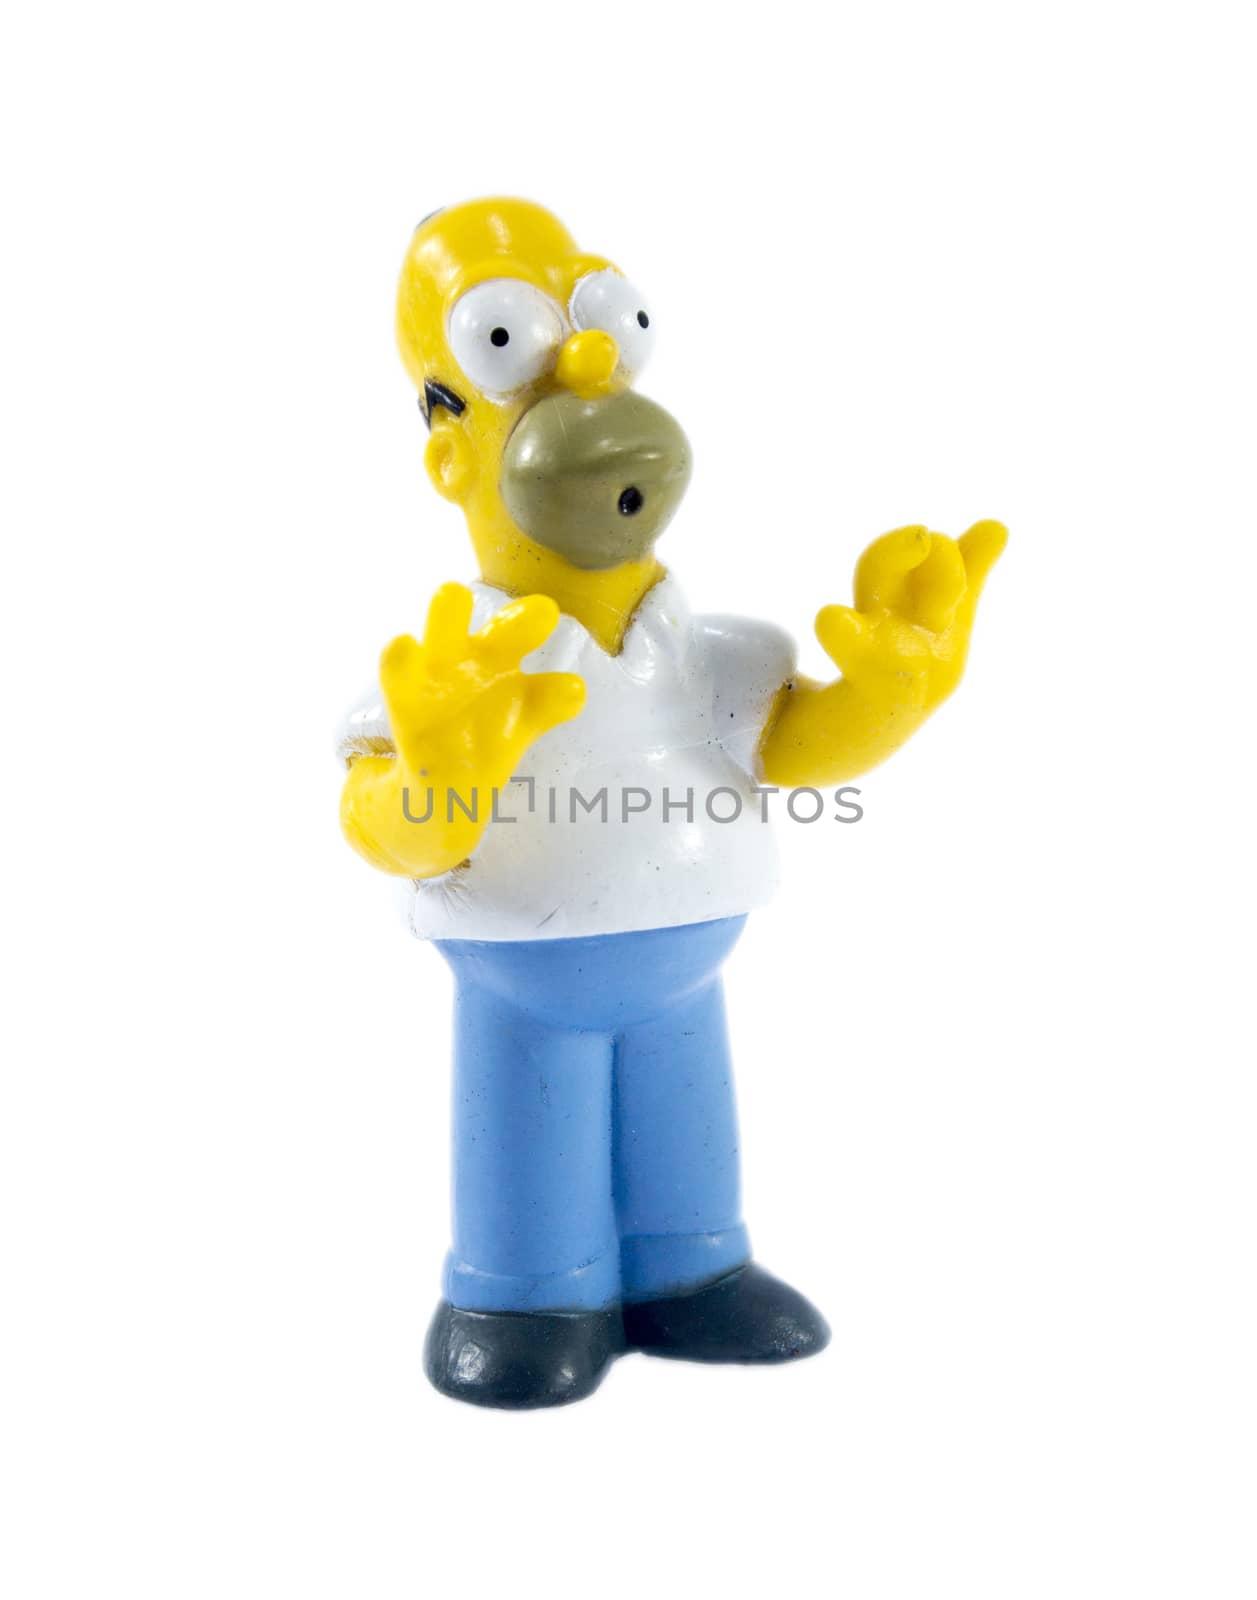 homer Simpson figure by designsstock